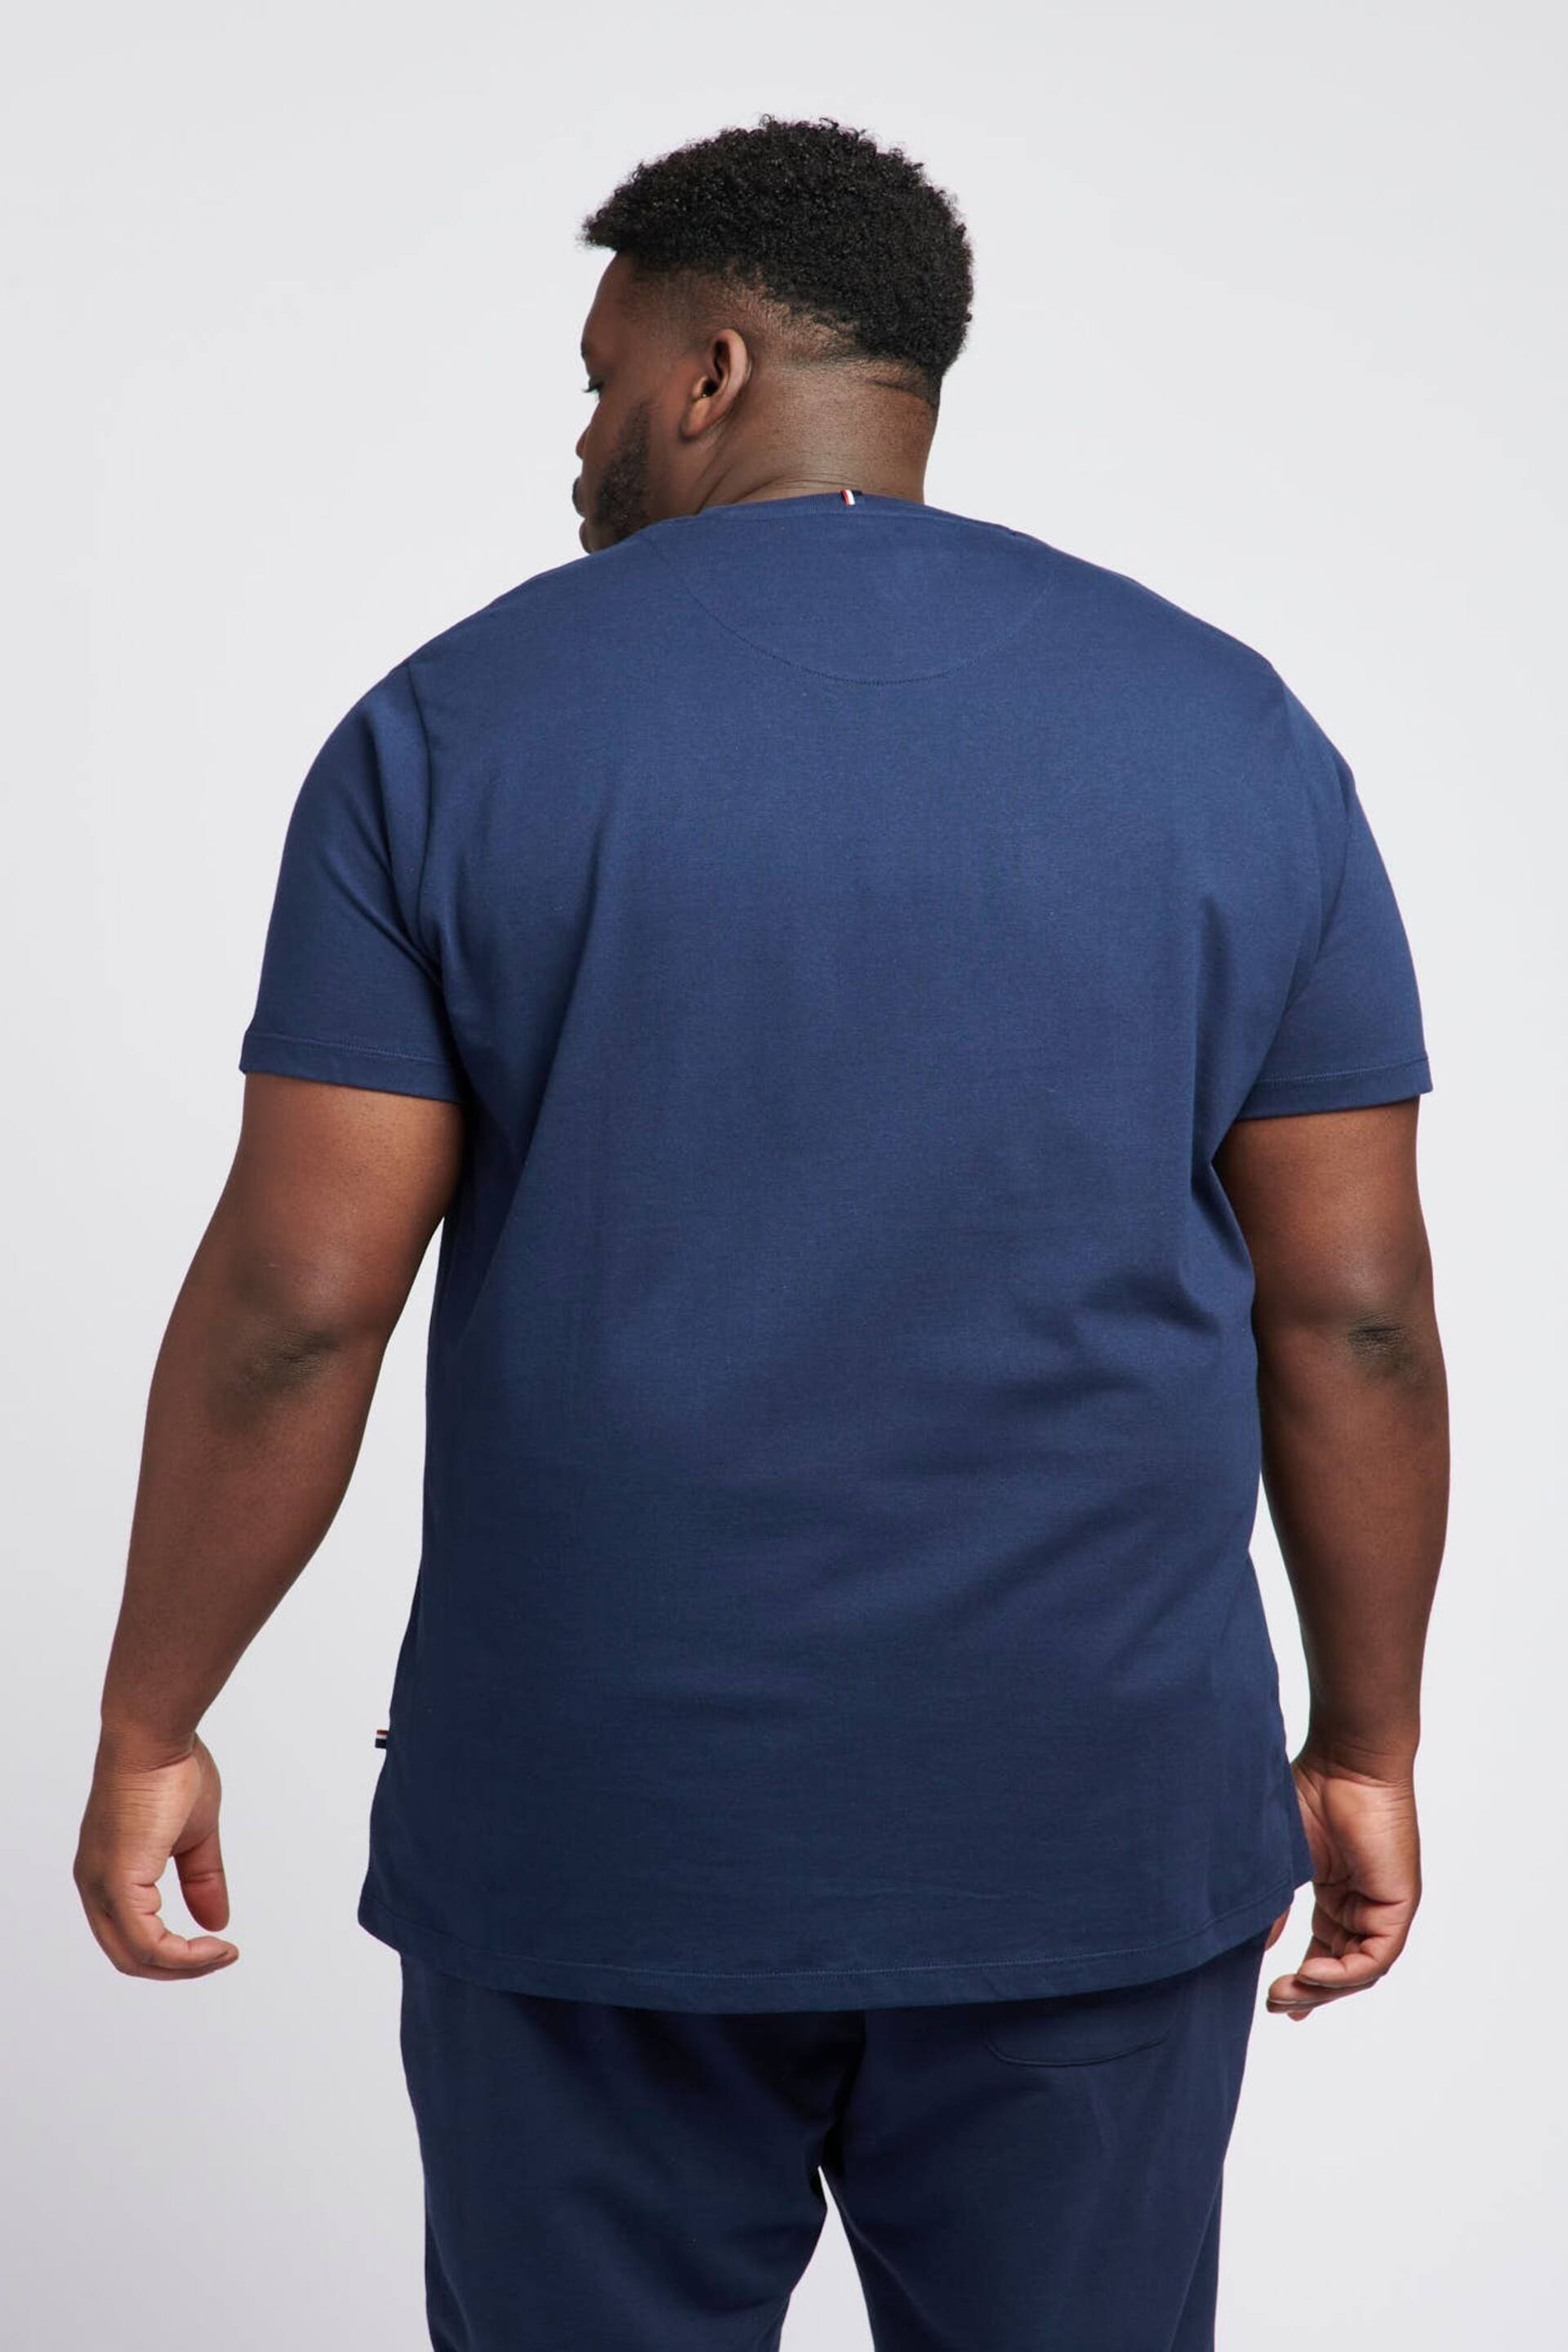 U.S. Polo Assn. Mens Big & Tall Core Logo T-Shirt - Image 2 of 6